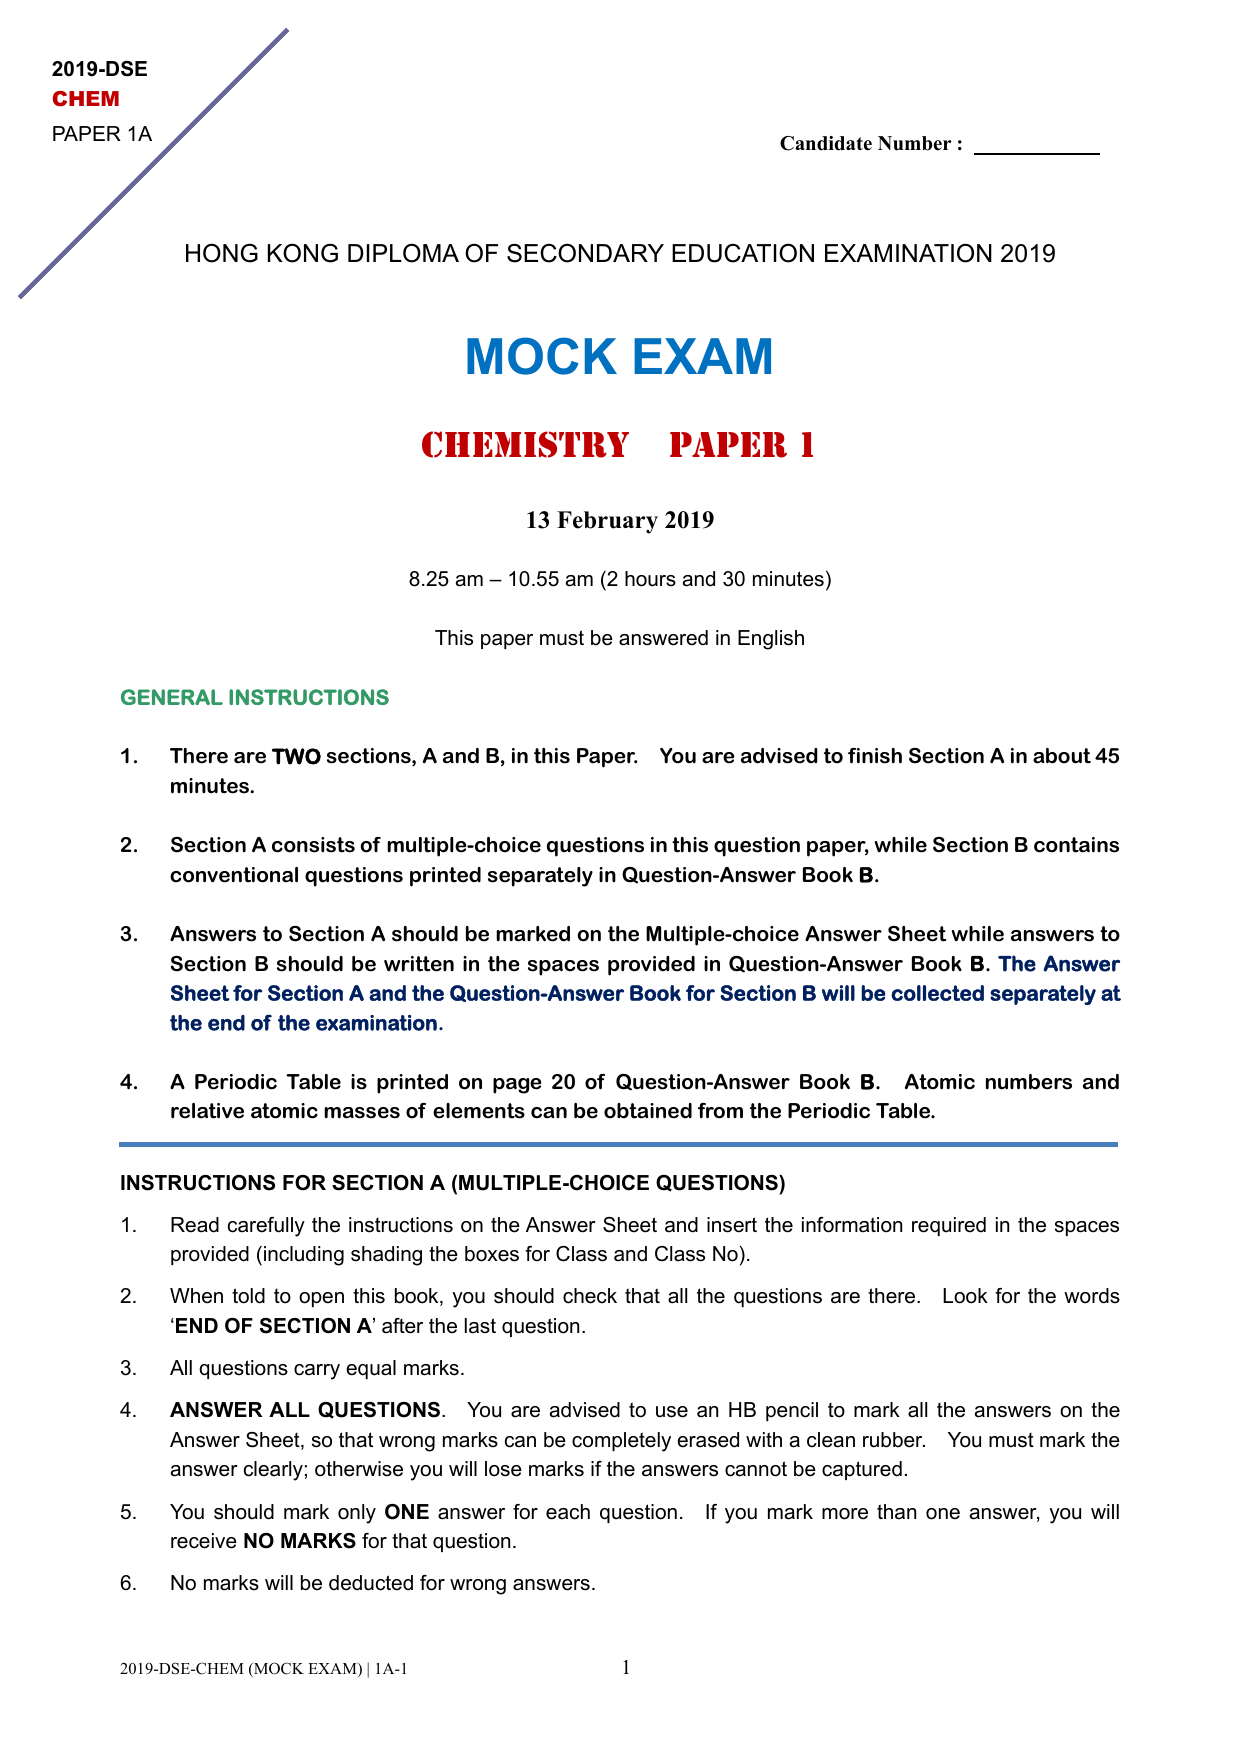 2019 DSE CHEM Mock Exam 1A.pdf